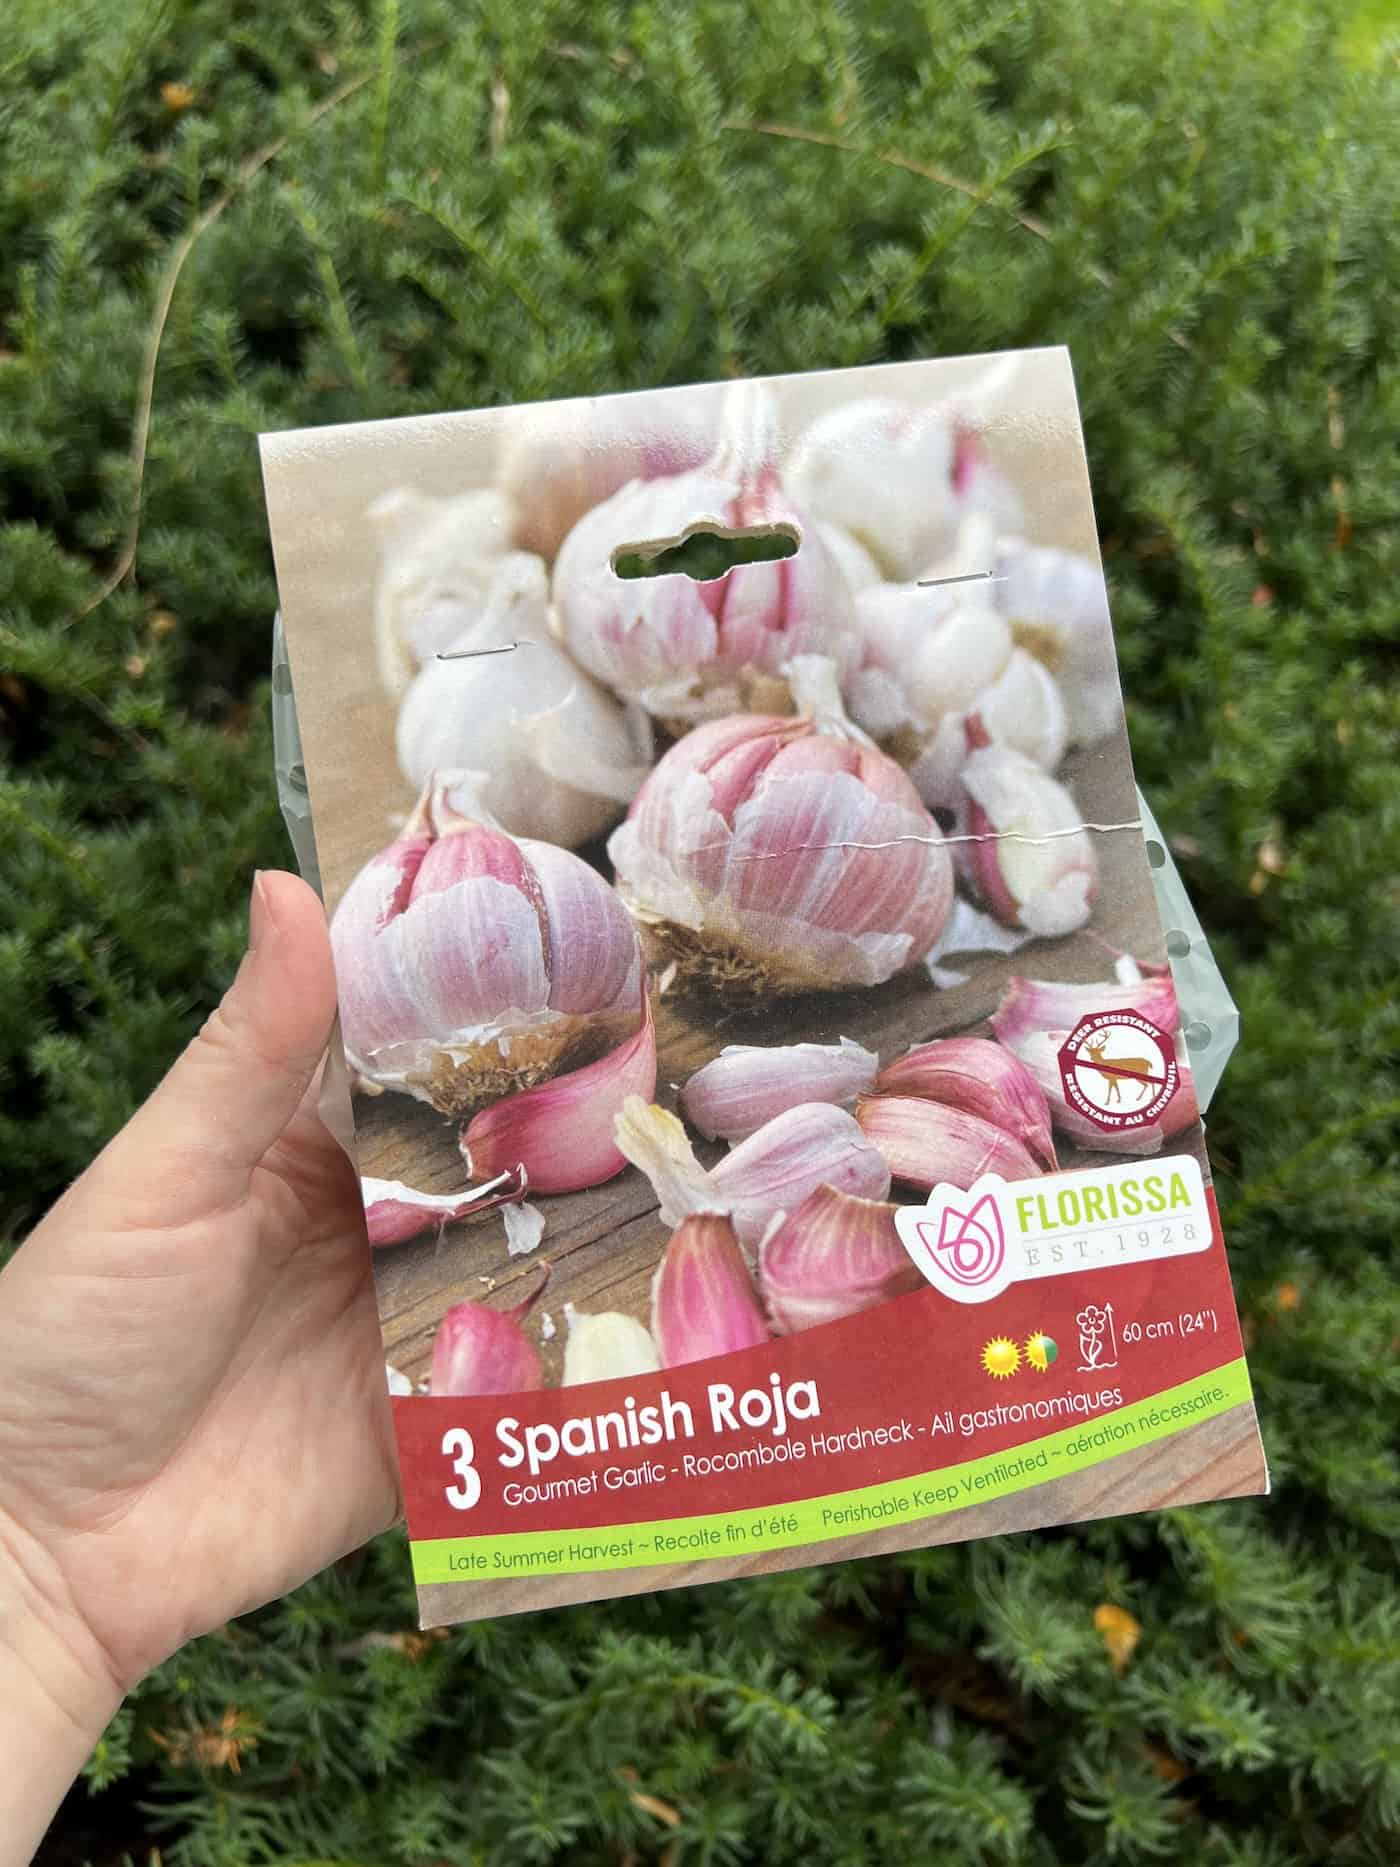 Seed garlic for spanish roja